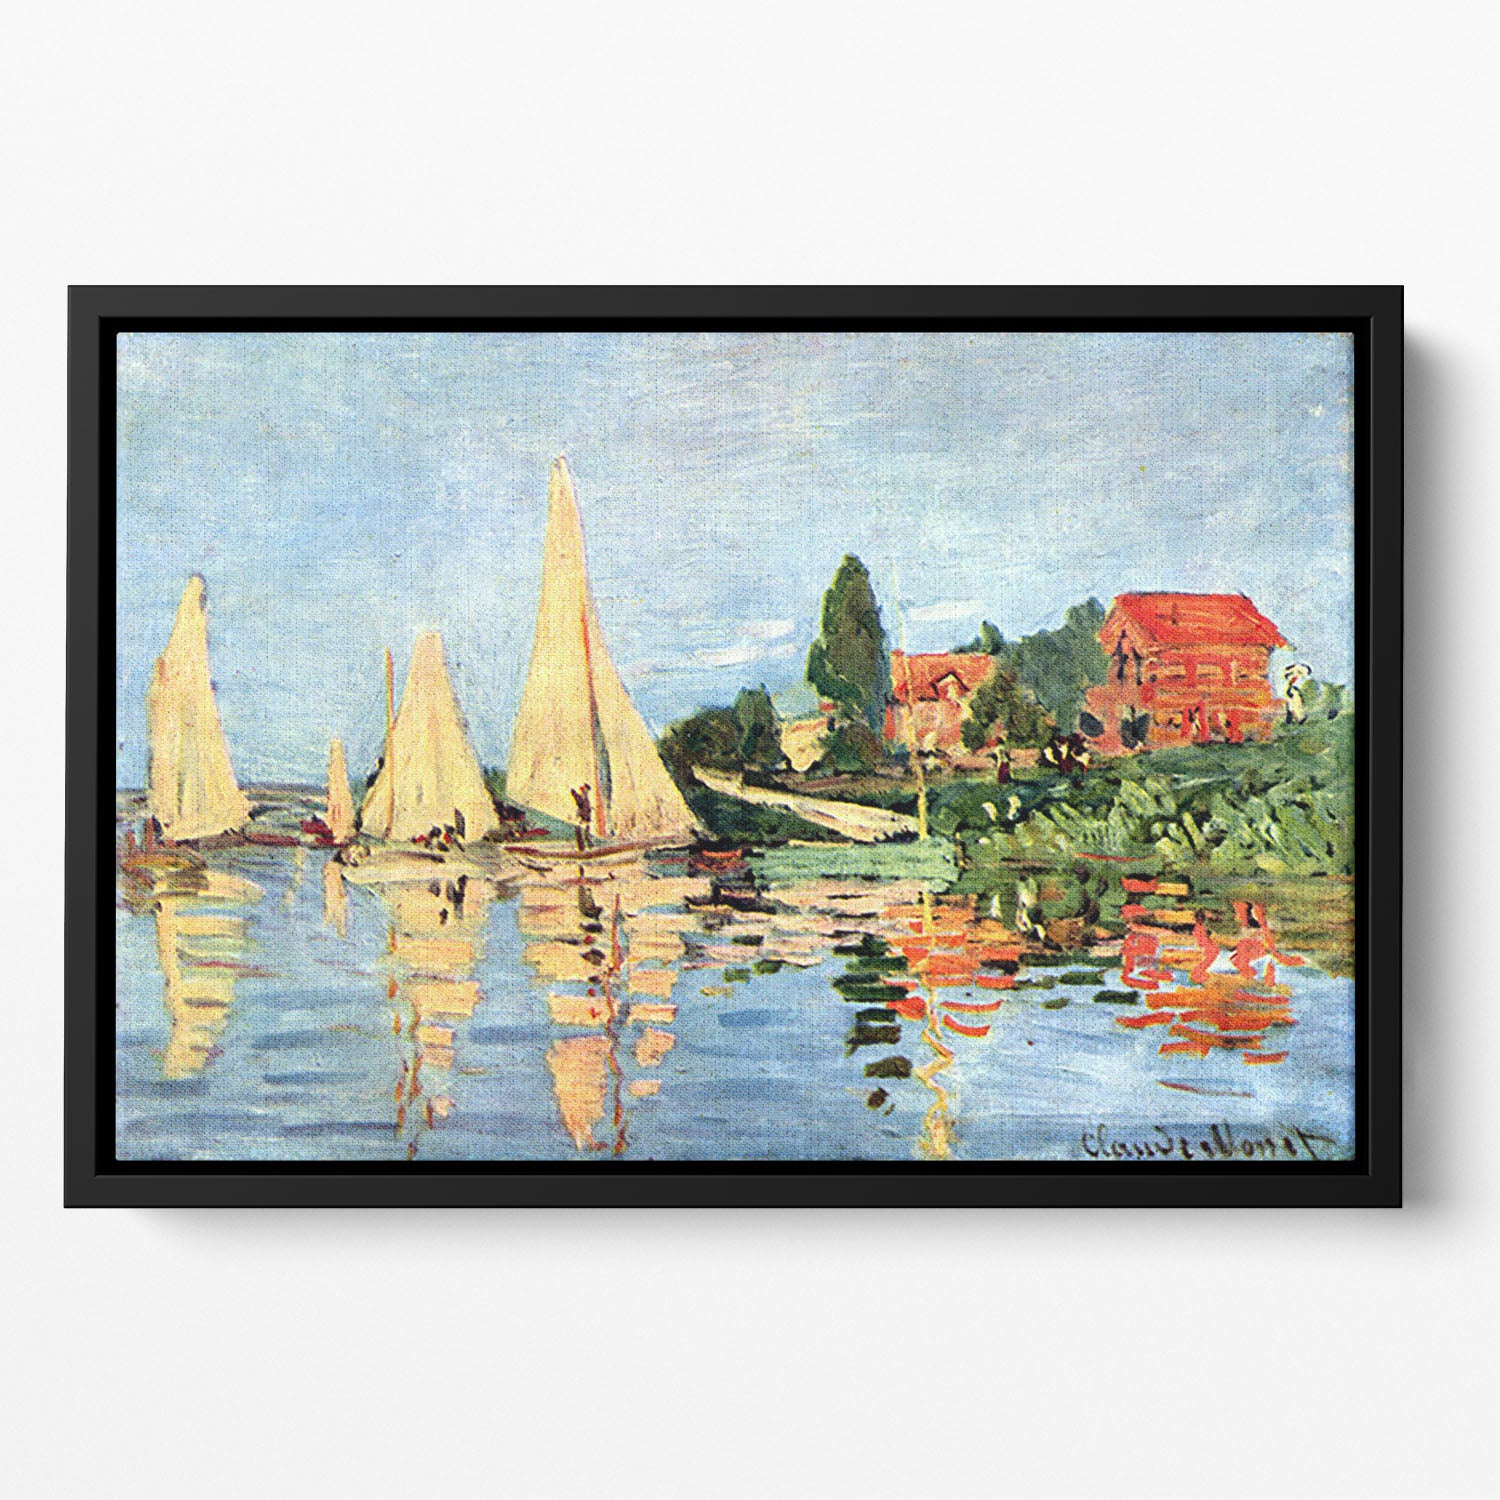 Regatta at Argenteuil by Monet Floating Framed Canvas